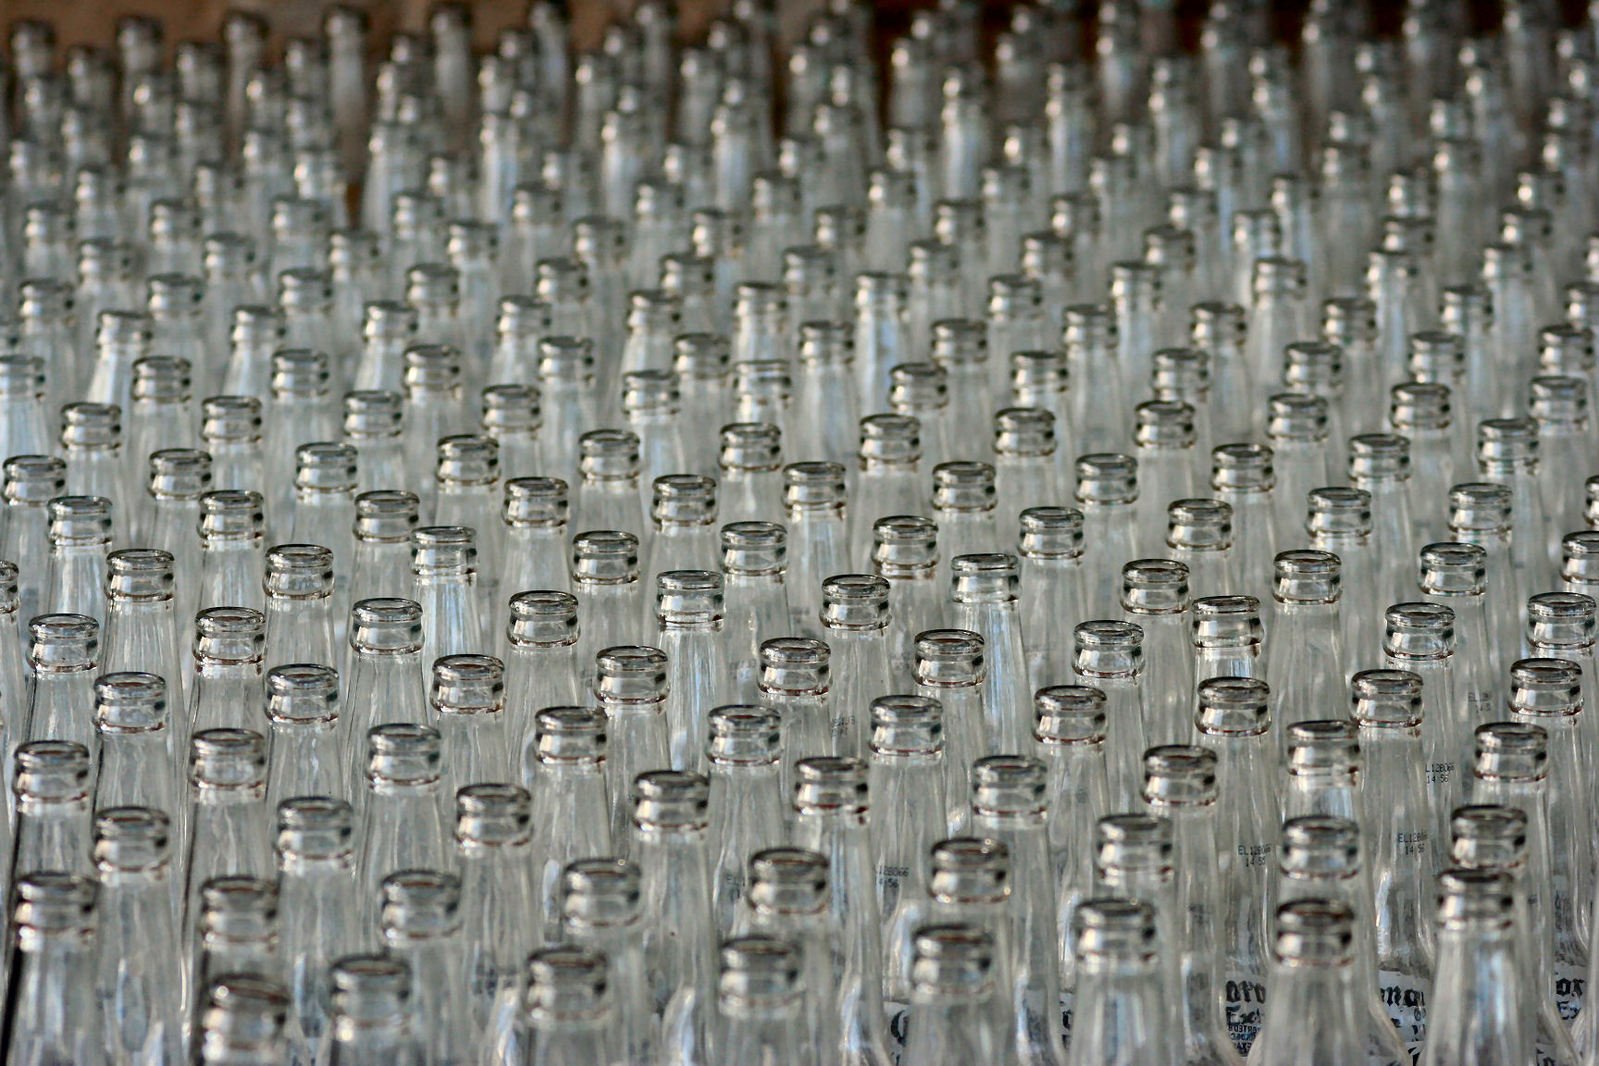 lots of empty water bottles sitting on the floor